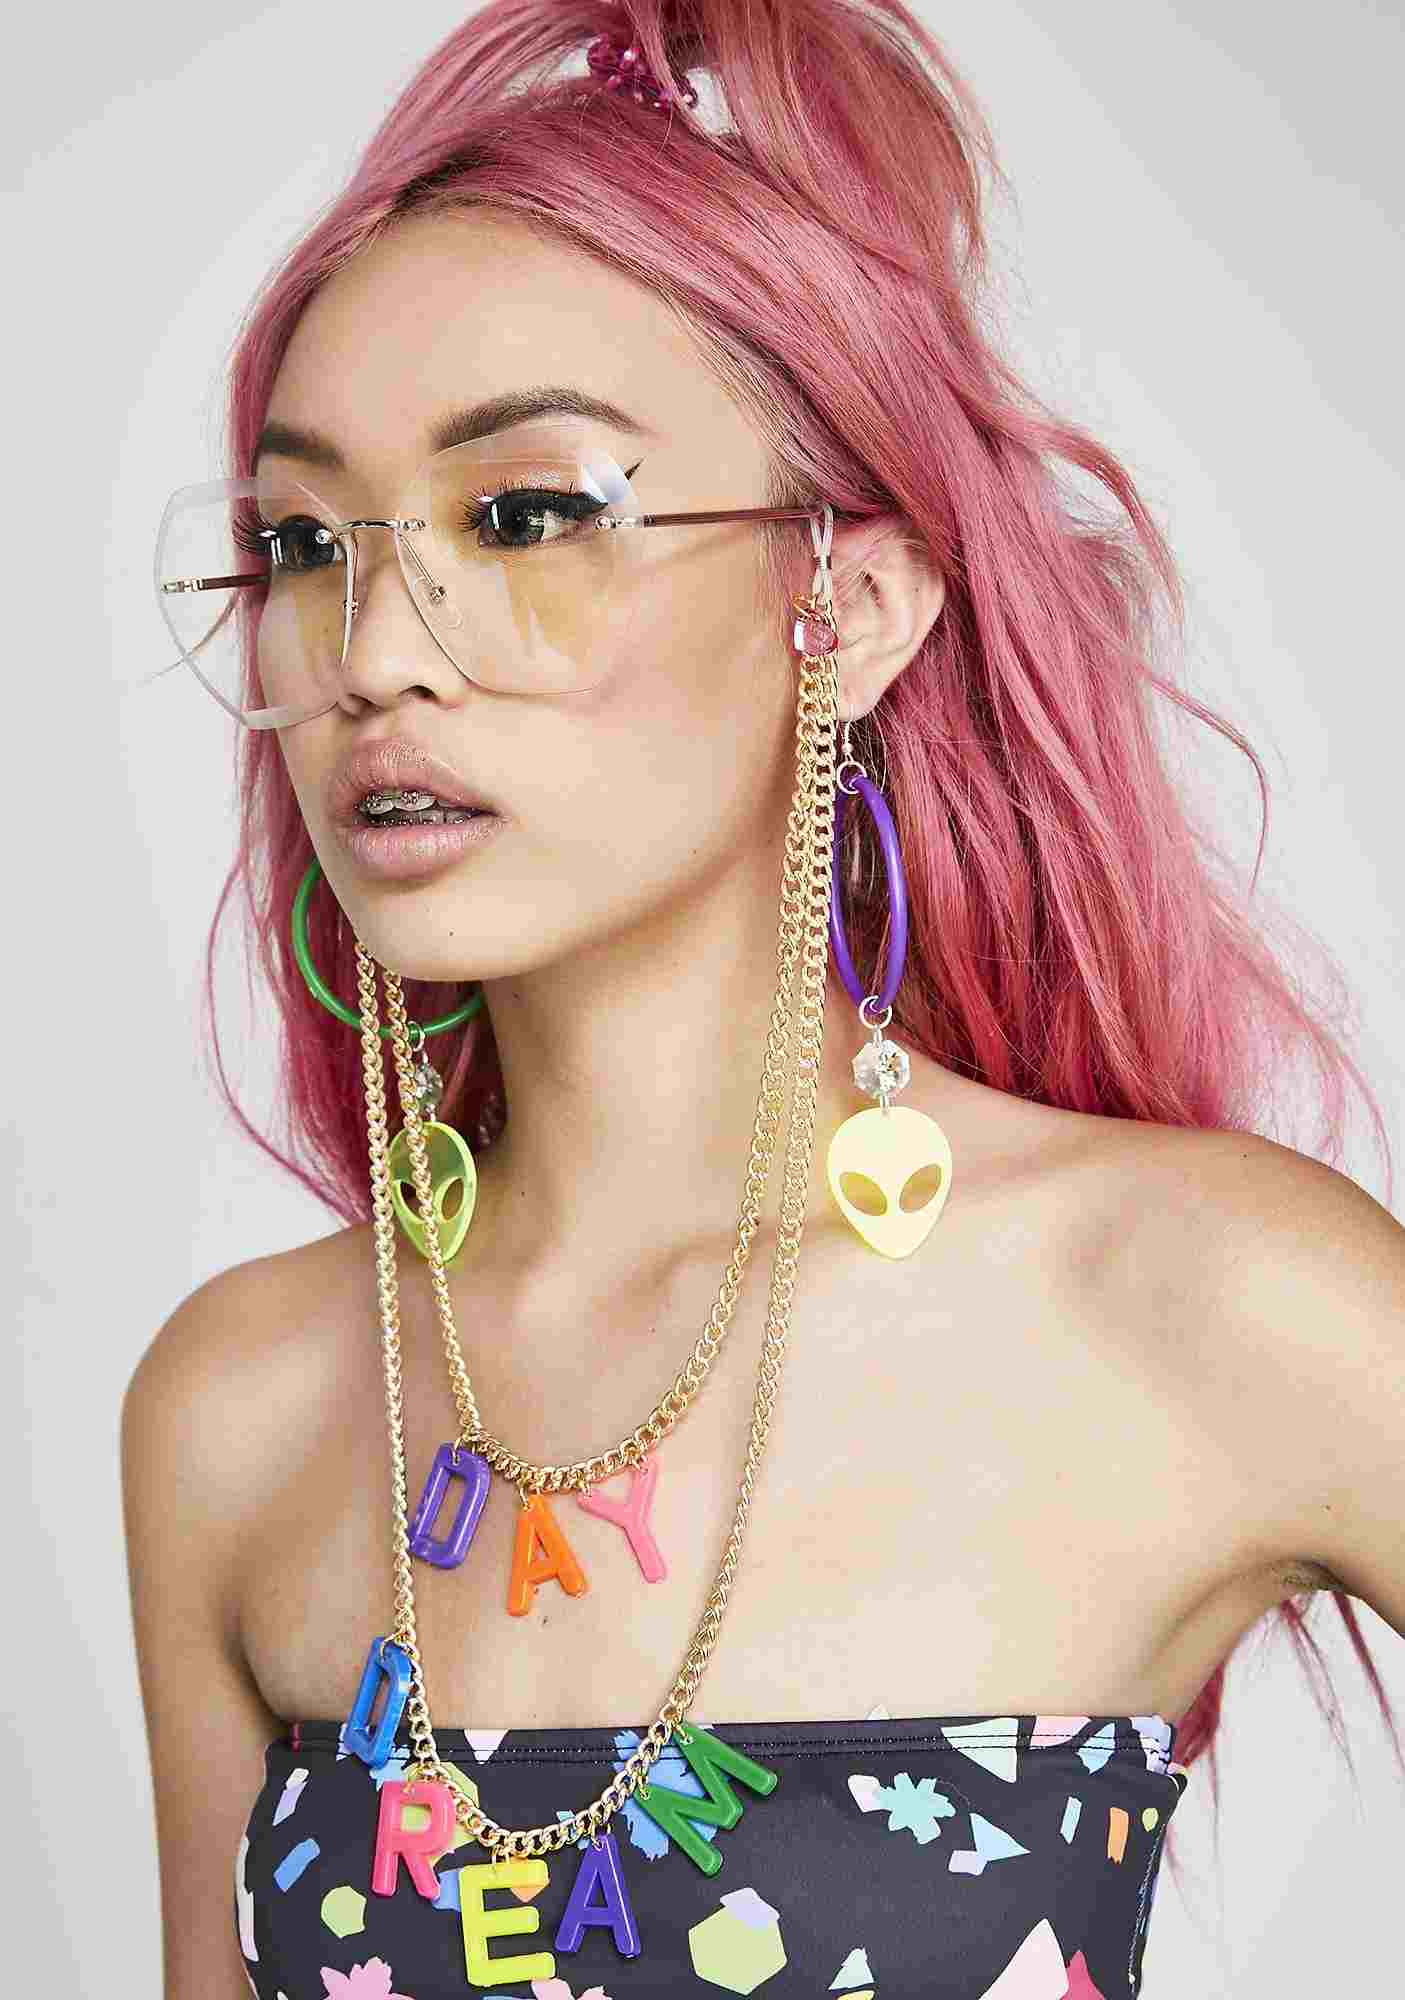 Sonnenbrillen Ketten Trend Modeaccessoires Frauen rosa Haarfarbe pastell Haartrends